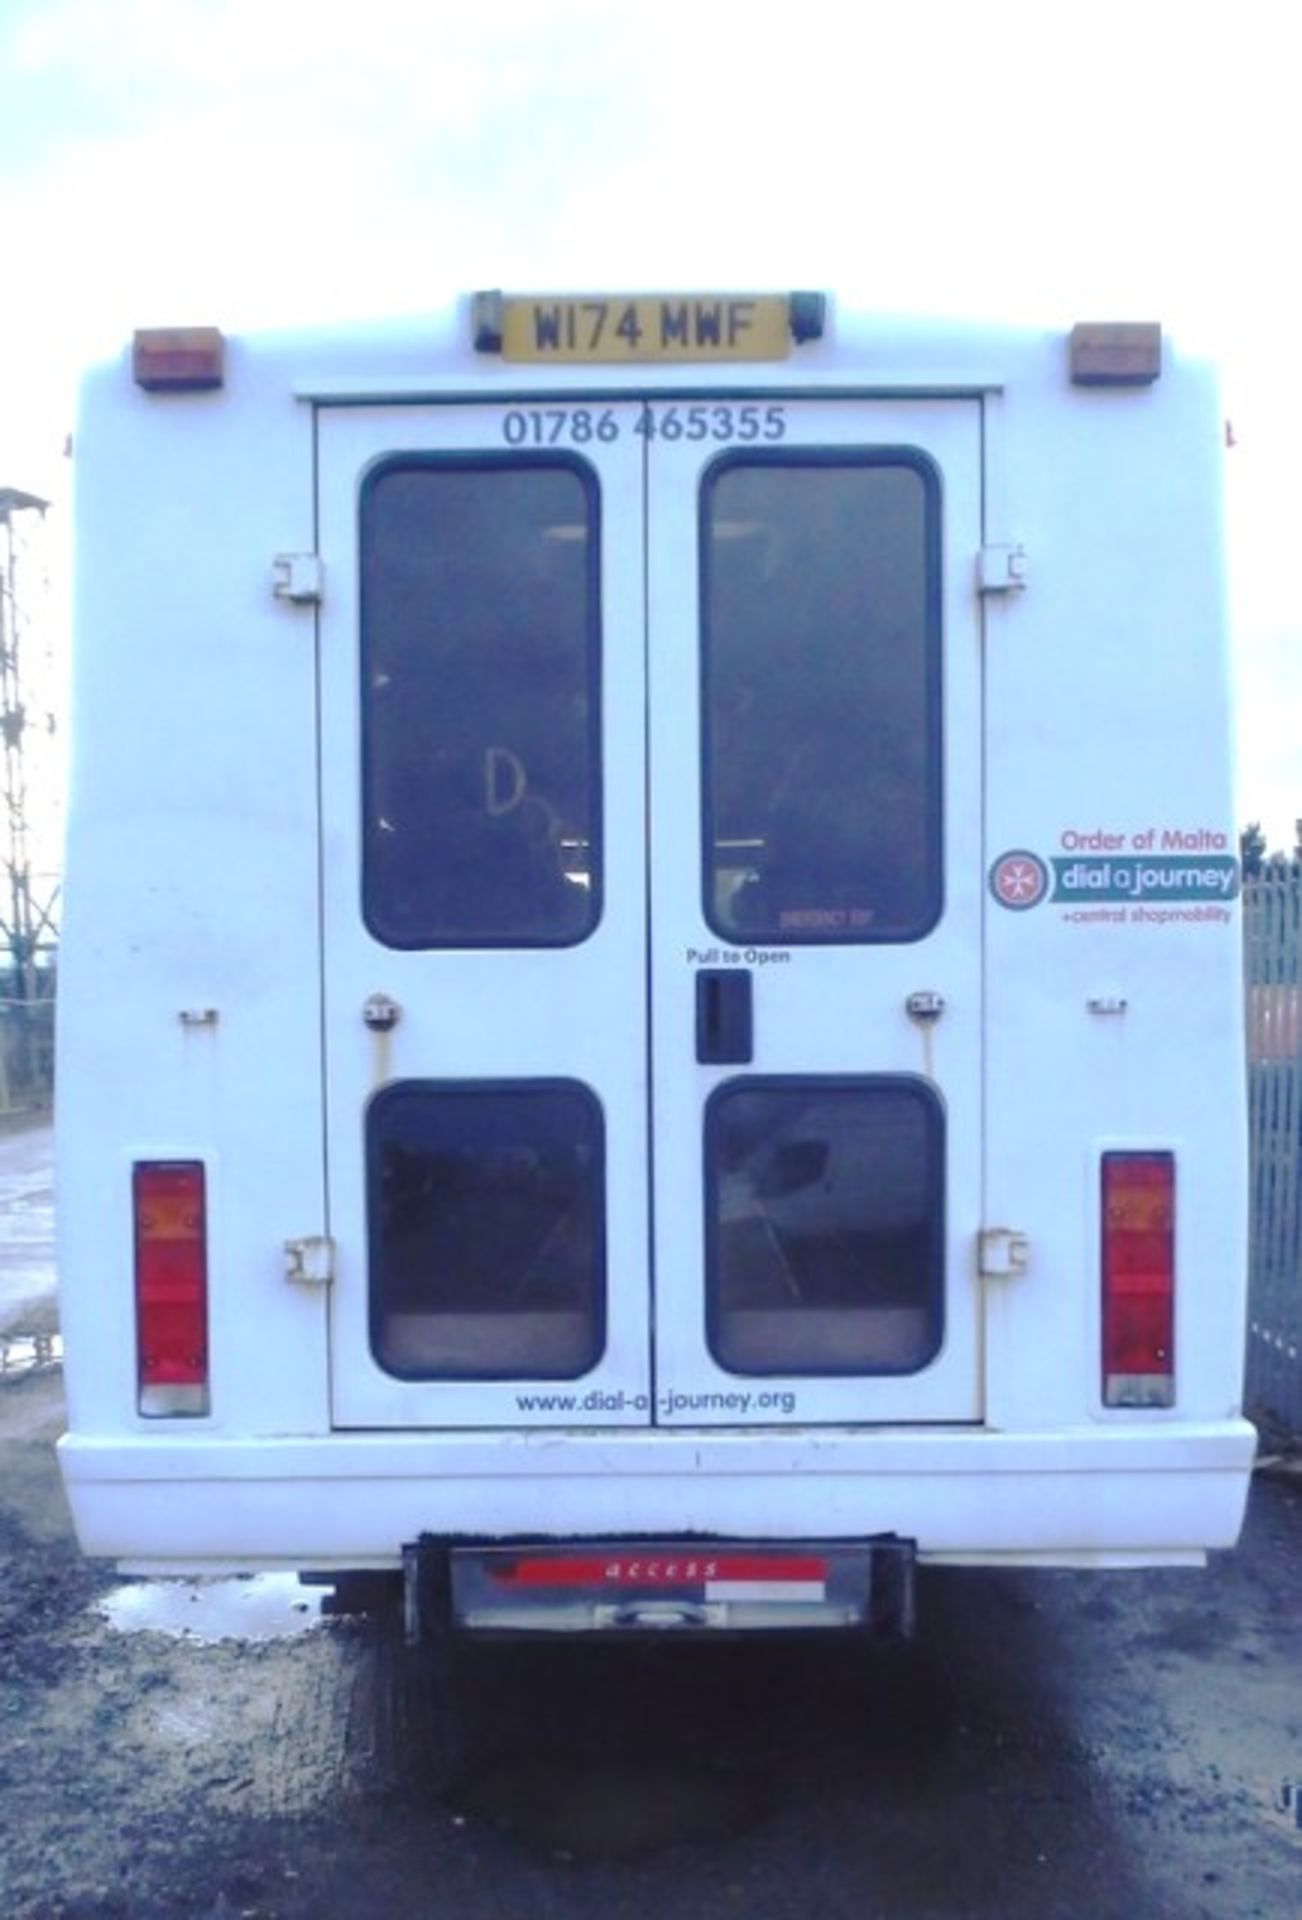 MERCEDES VARIO - 4250cc
Body: 4 Dr Minibus
Color: White
First Reg: 01/08/2000
Doors: 4
MOT: 07/05/ - Image 14 of 18